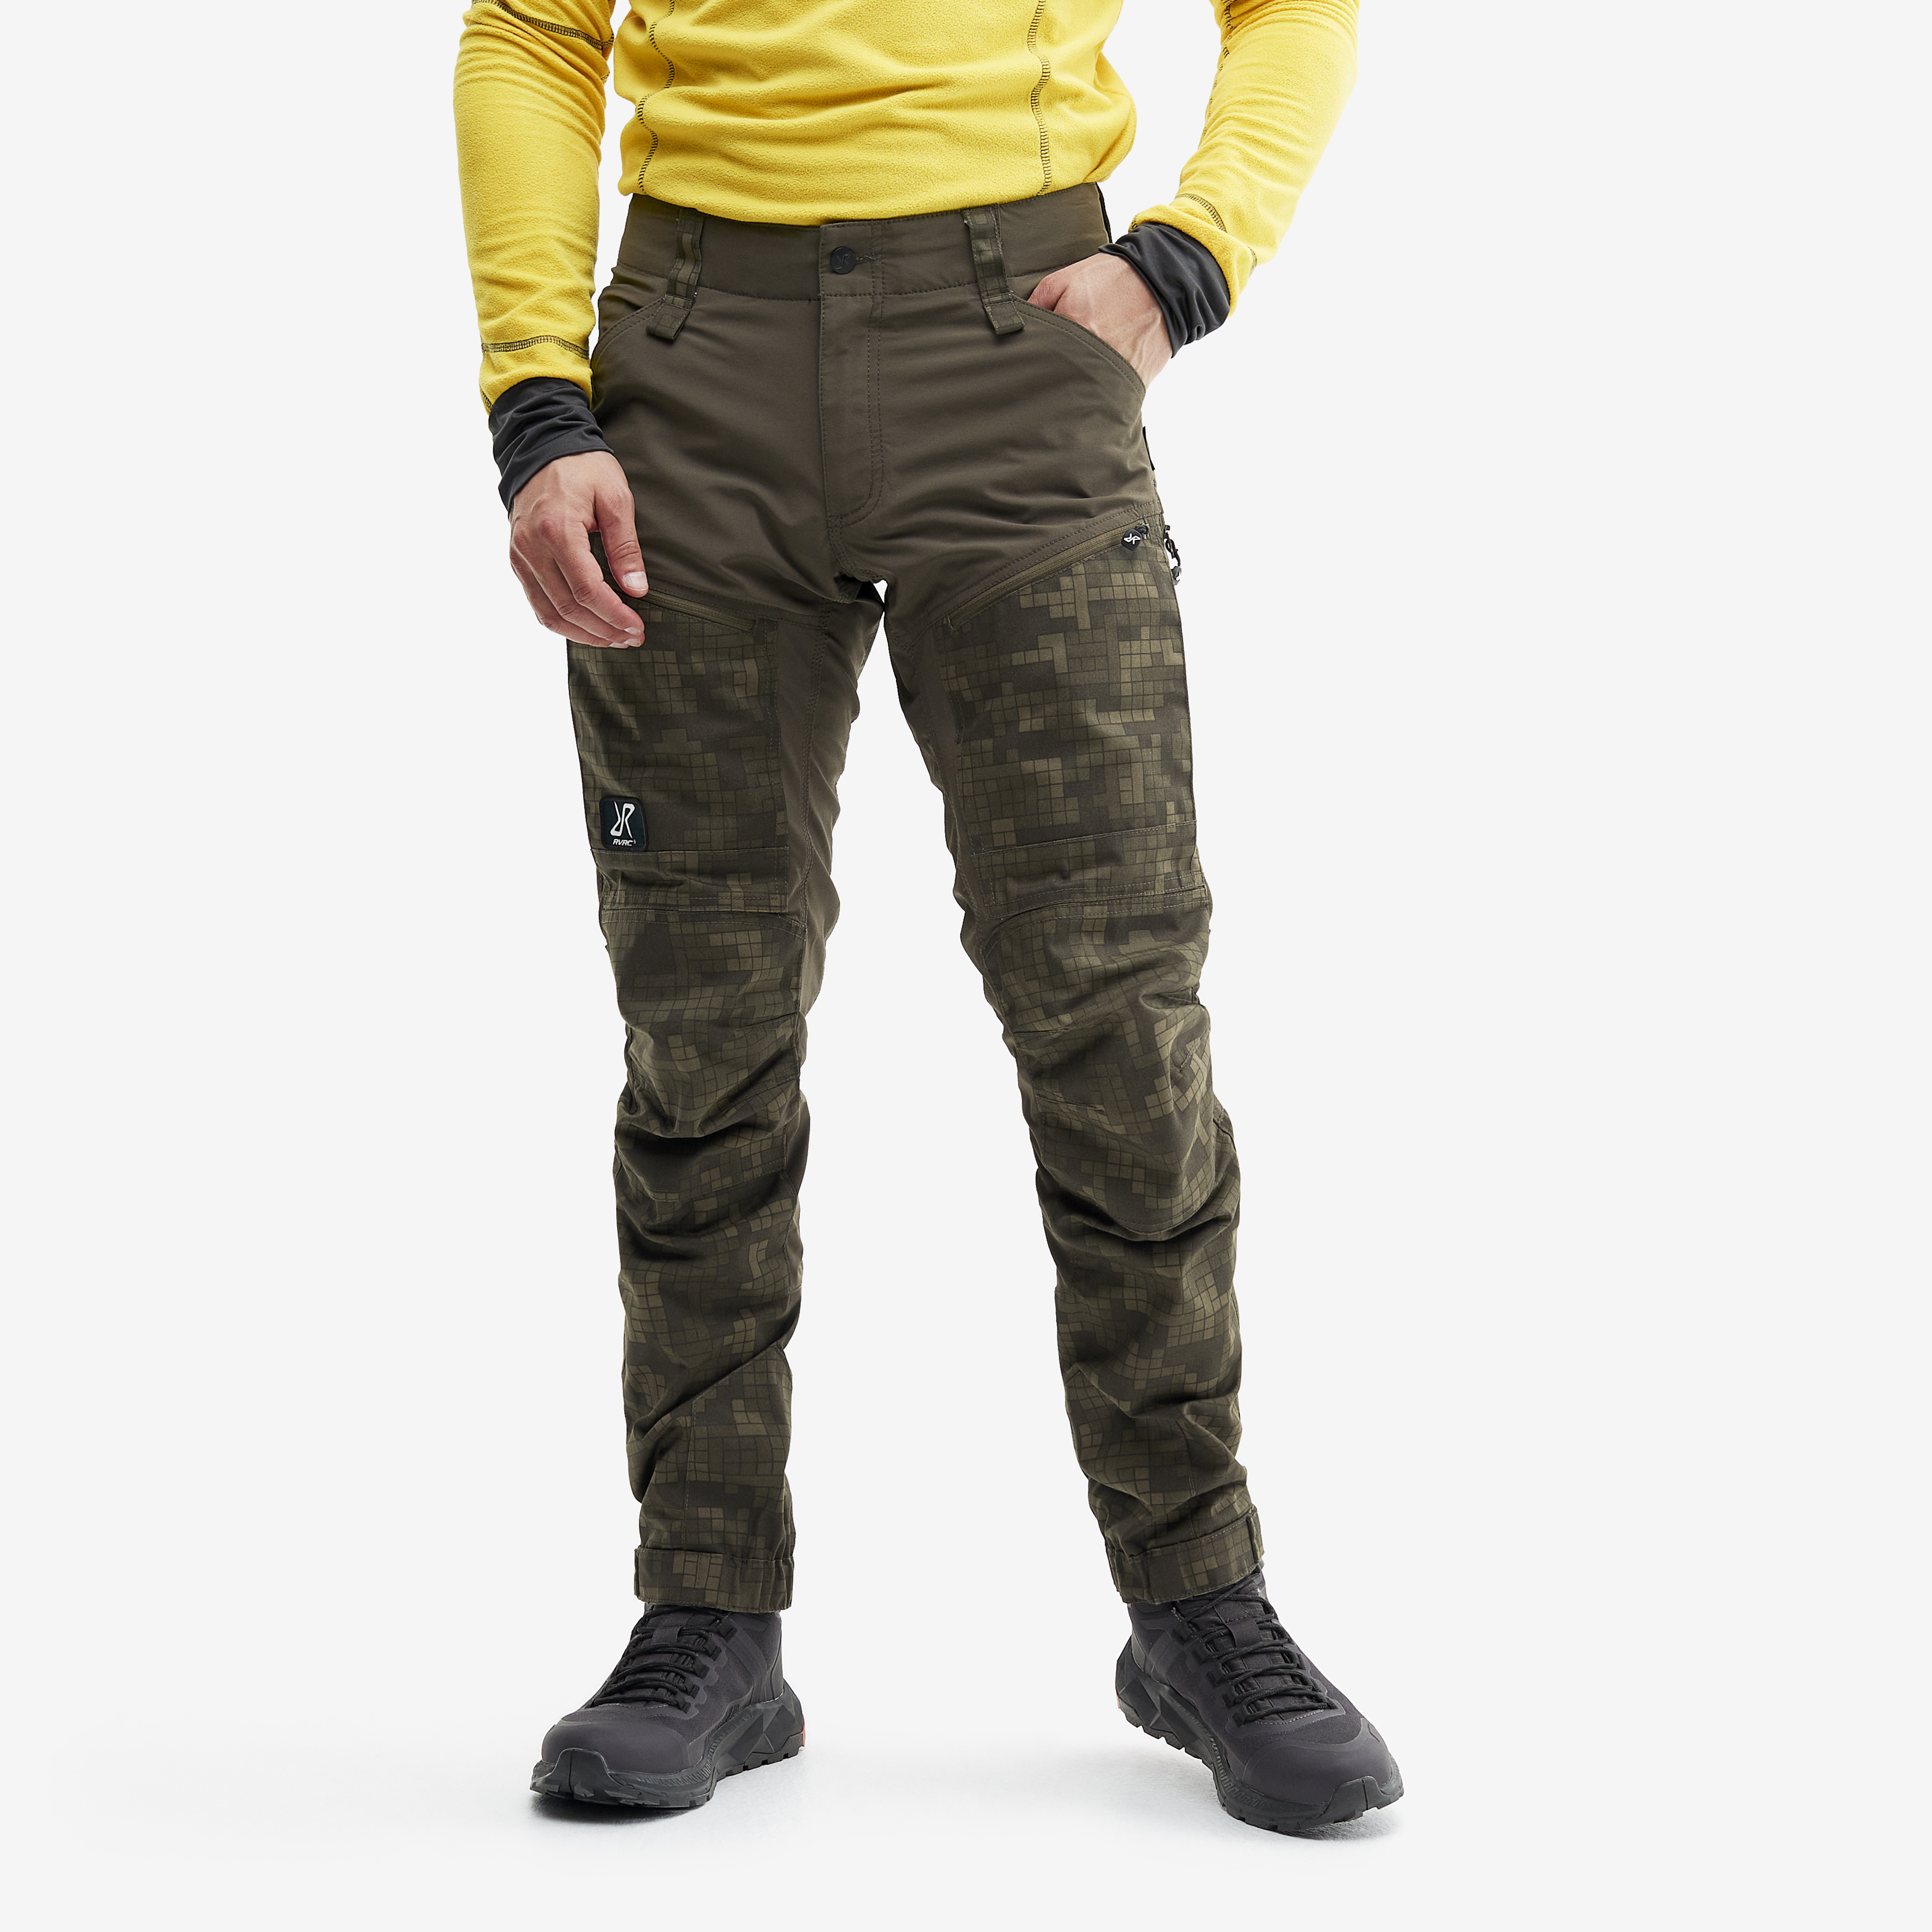 RVRC GP Pro hiking pants for men in brown